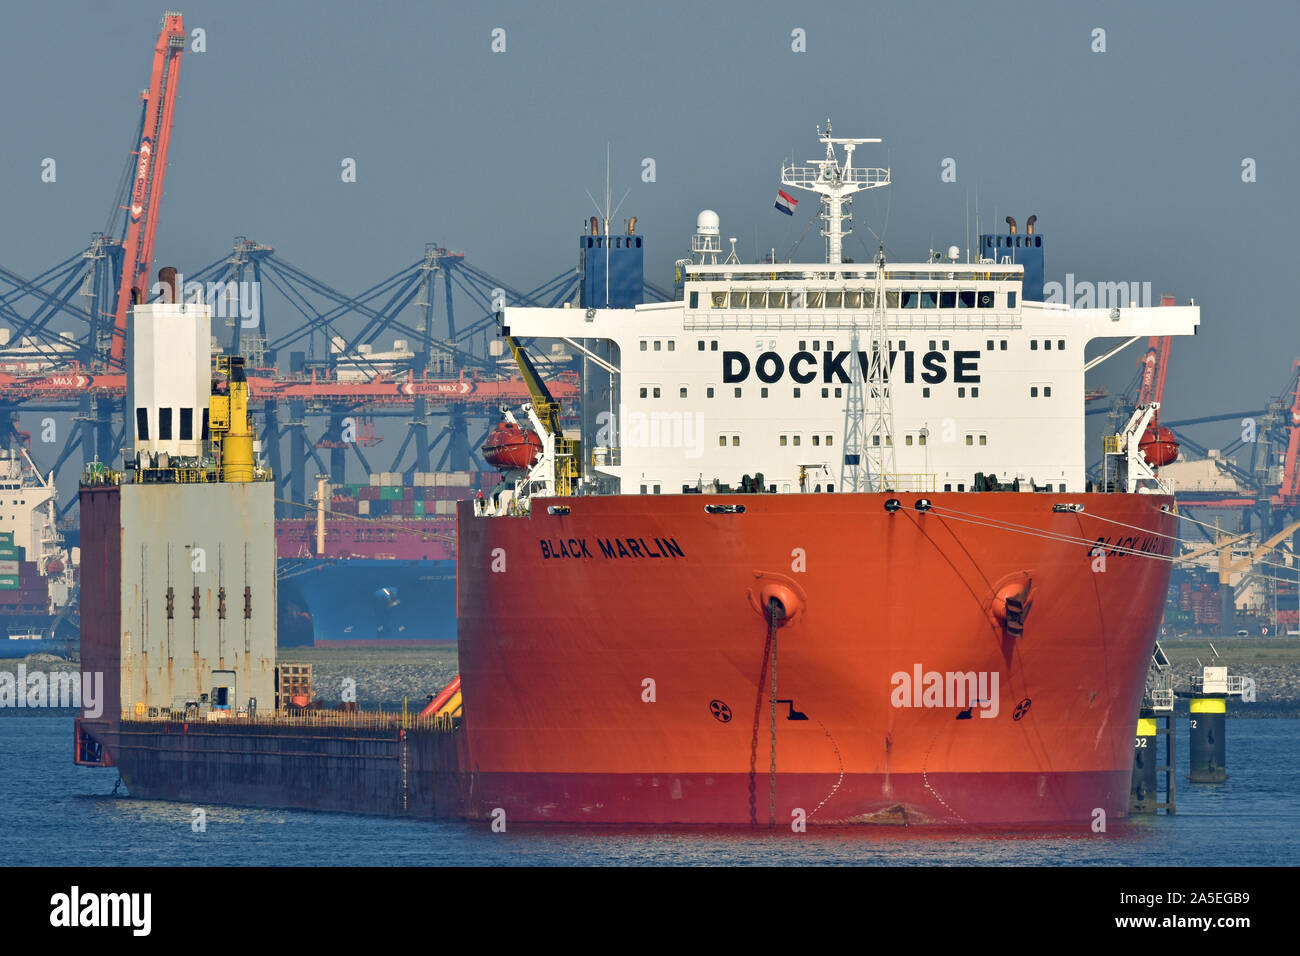 Heavy Load Carrier Black Marlin Stock Photo